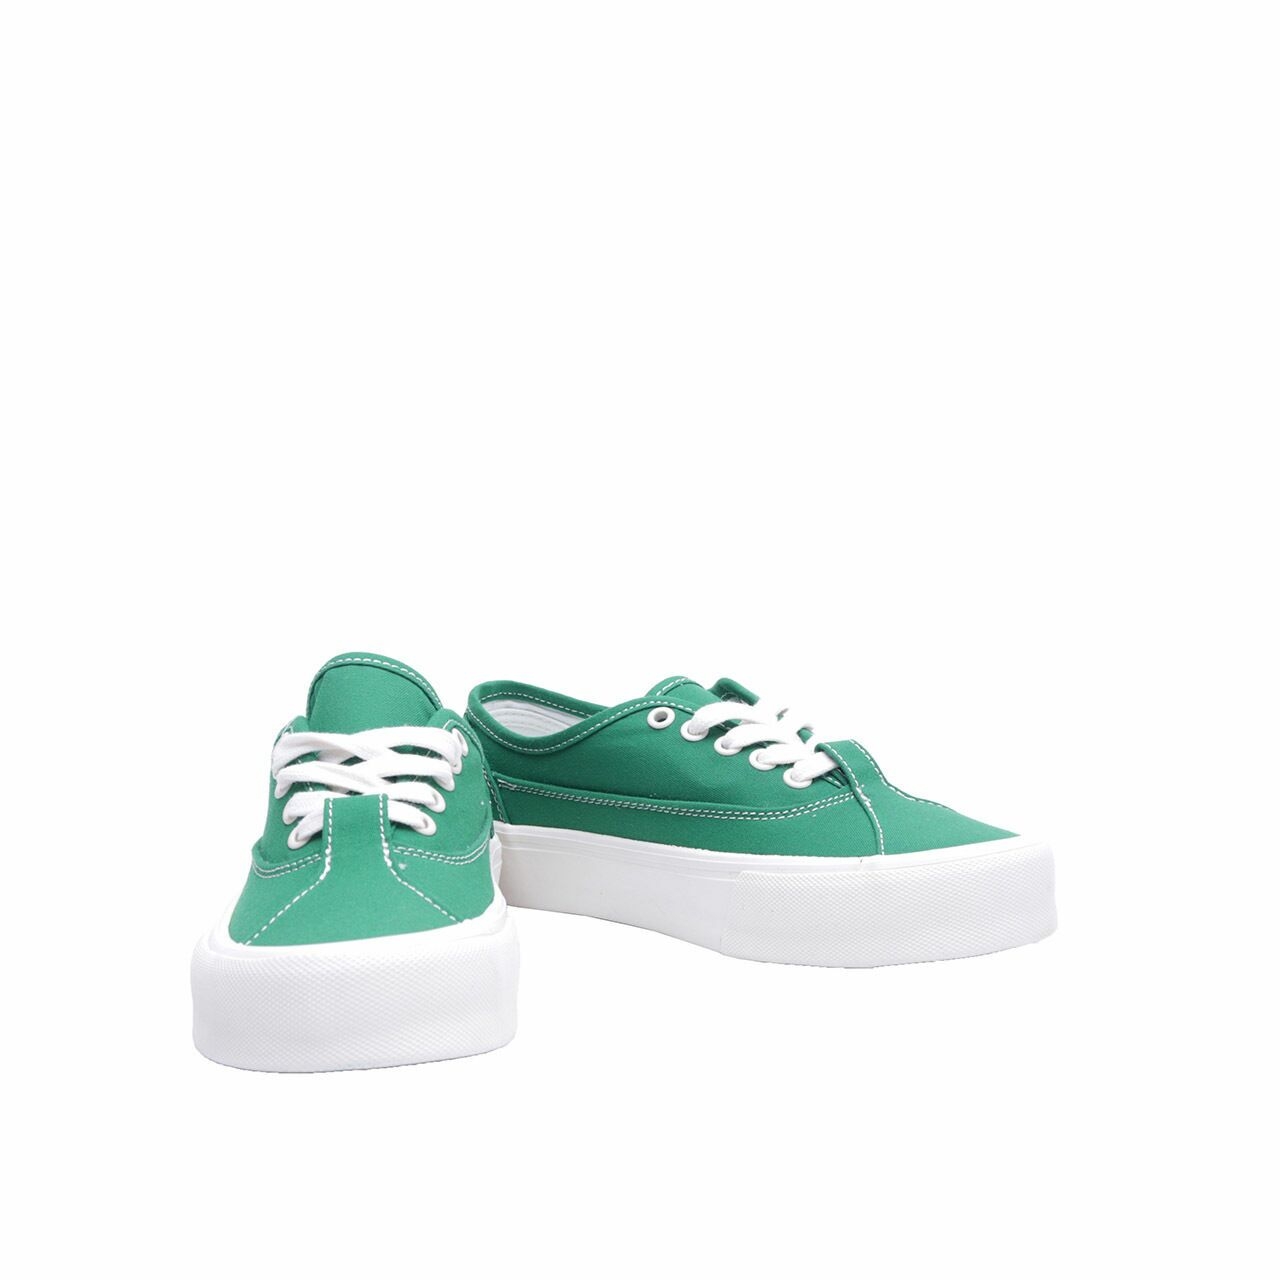 Neats Green Sneakers